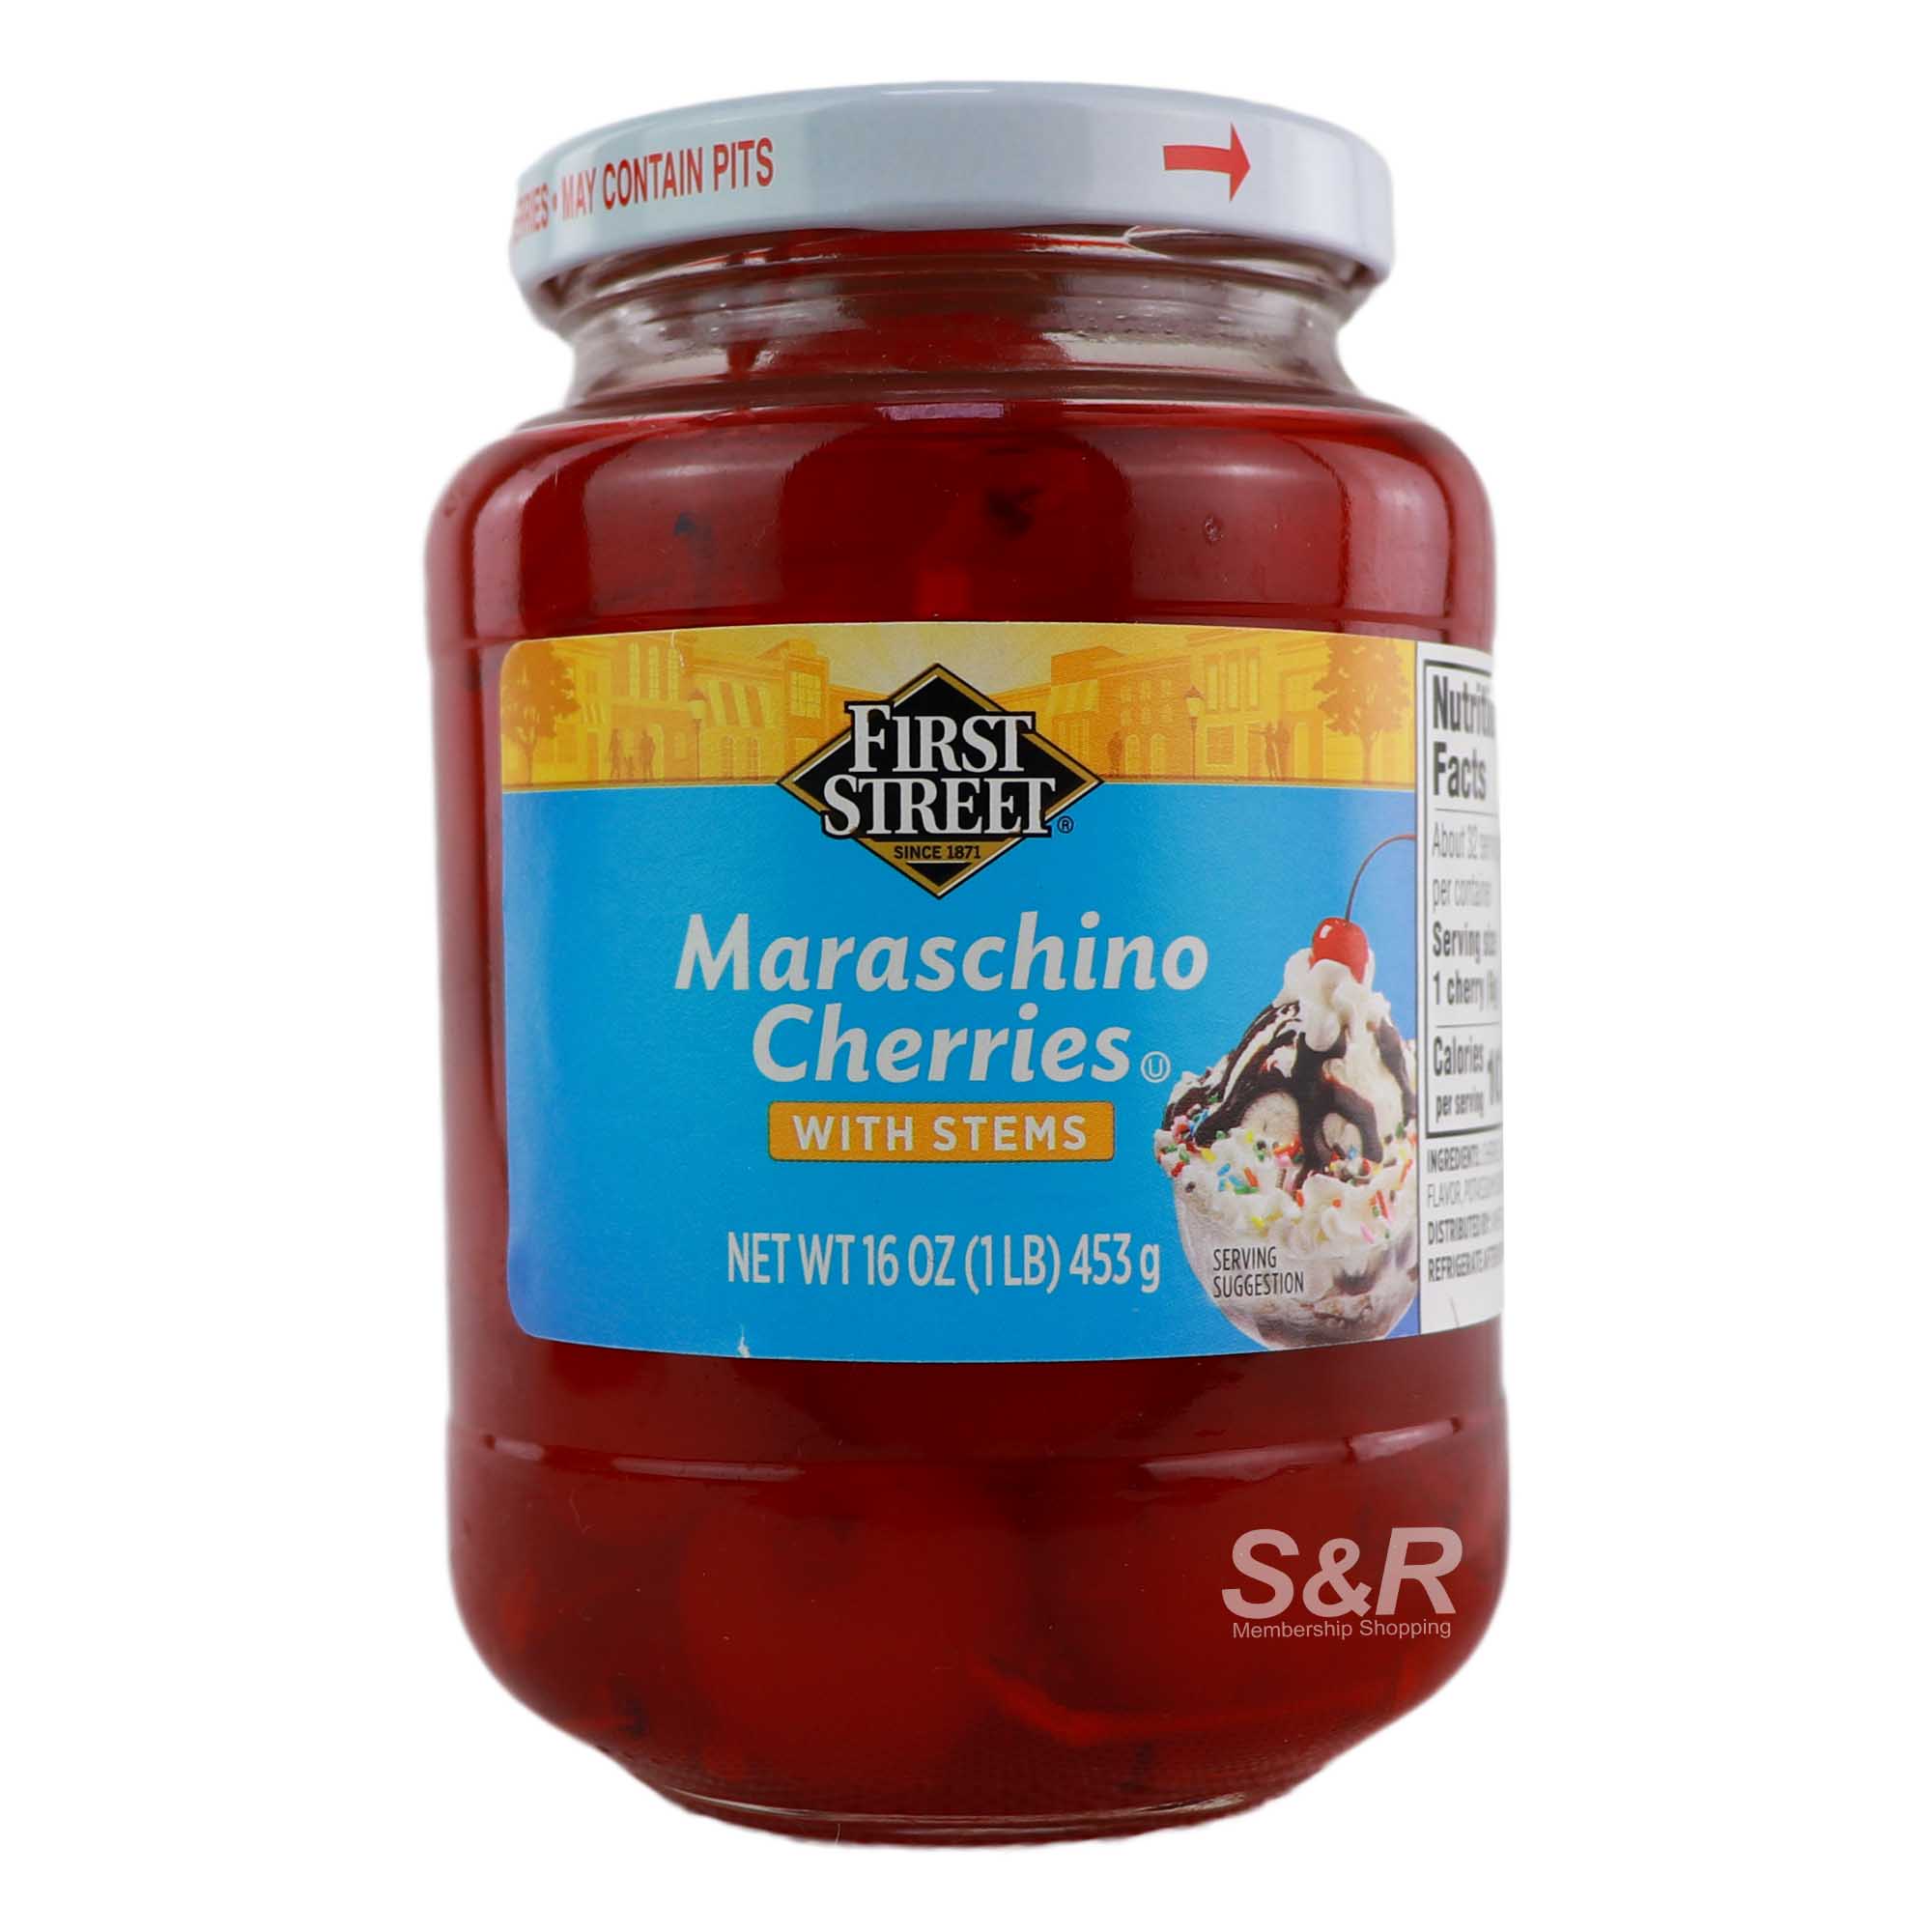 First Street Maraschino Cherries with Stems 453g